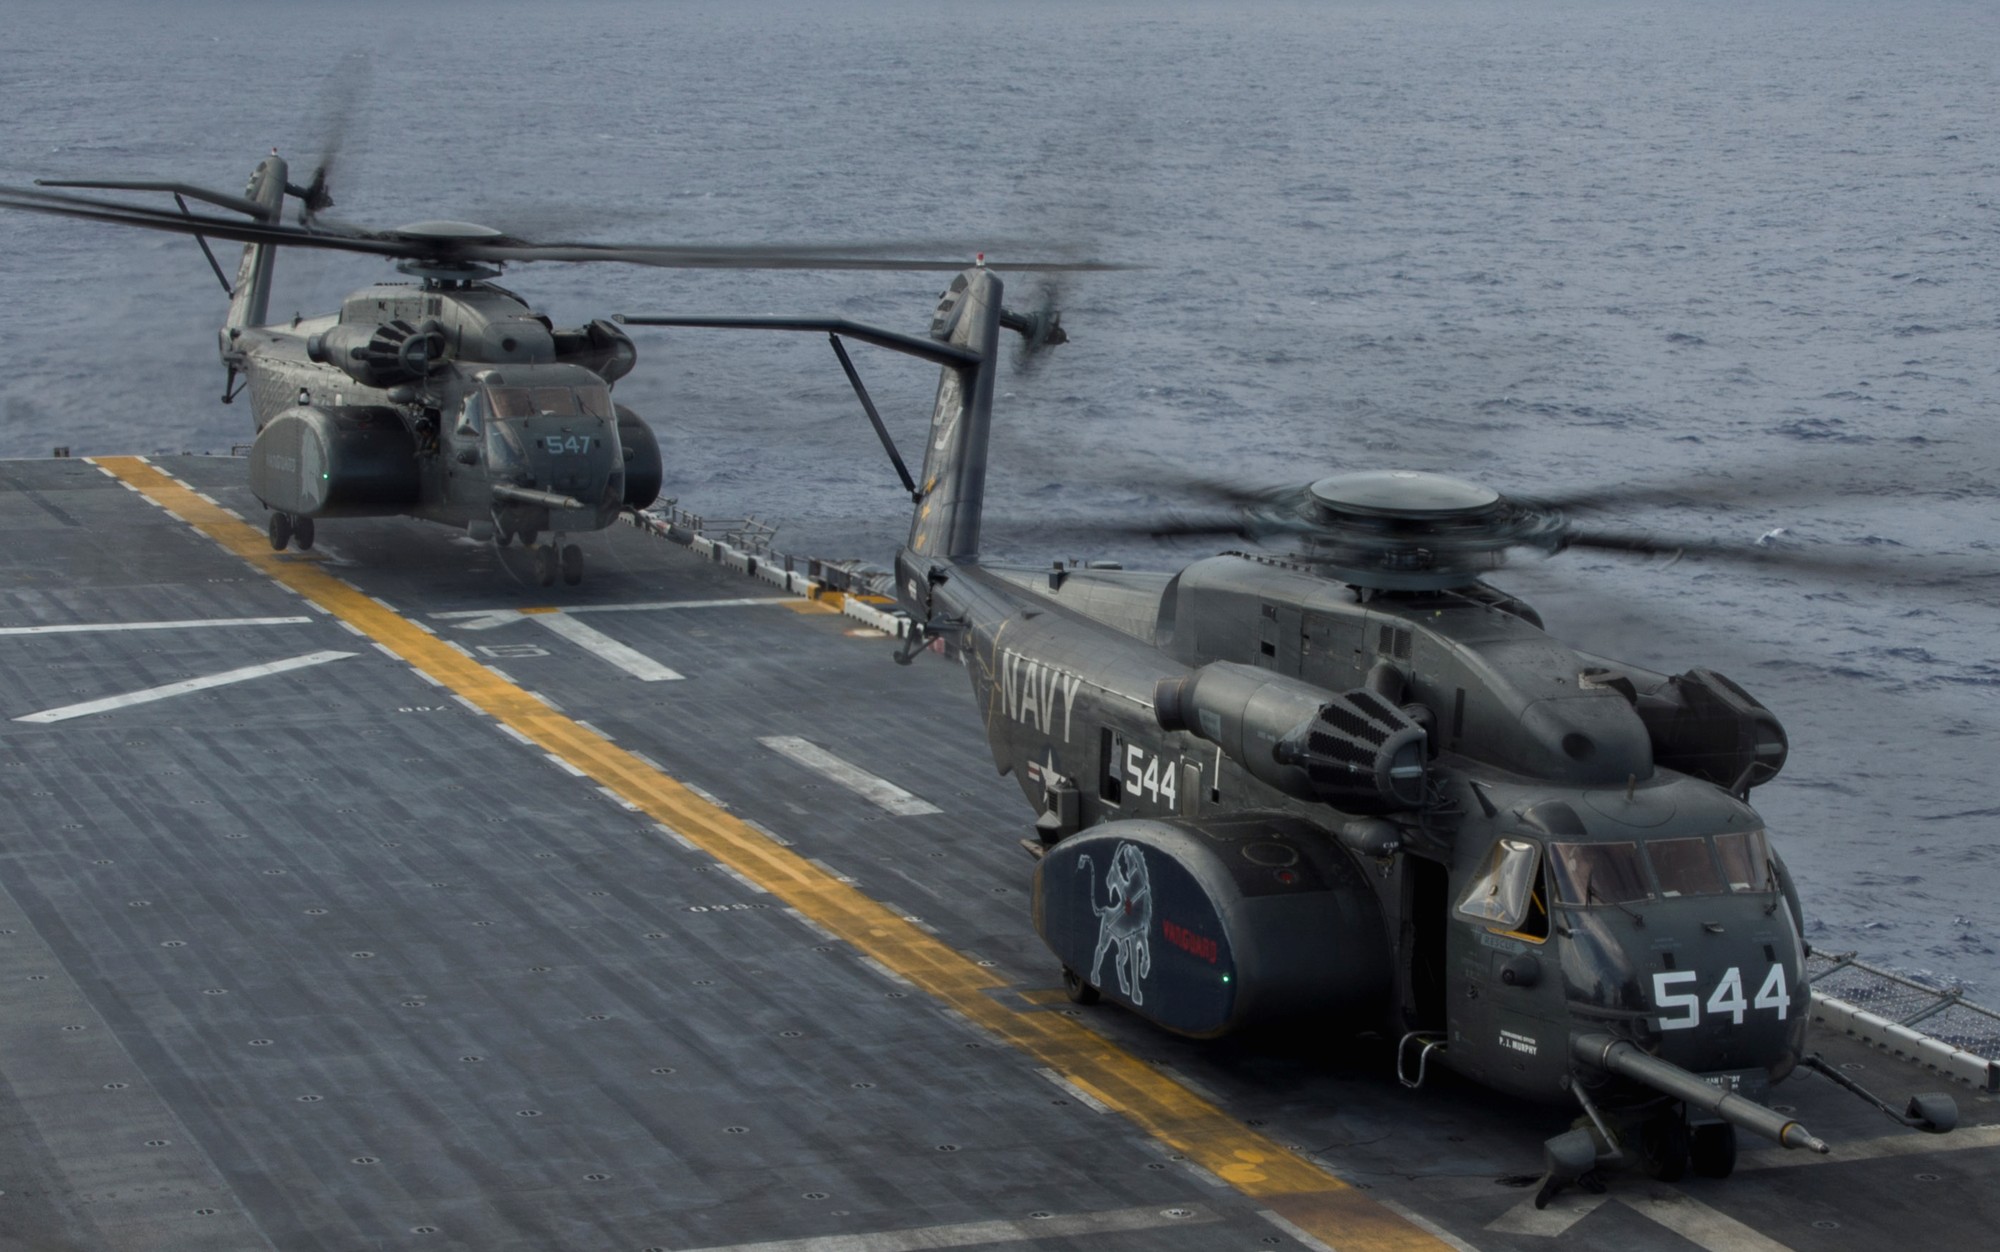 hm-14 vanguard helicopter mine countermeasures squadron navy mh-53e sea dragon 09